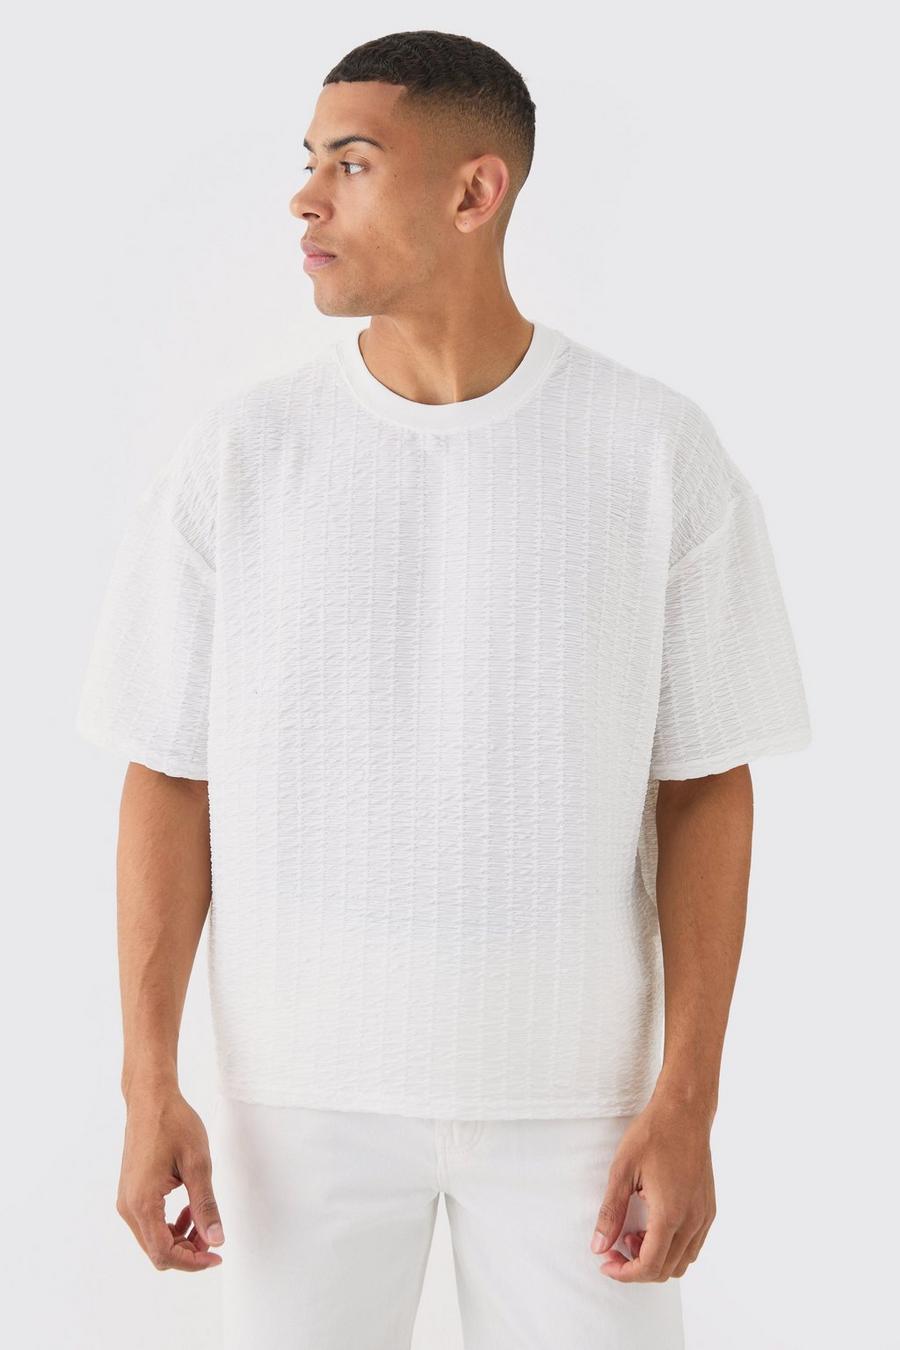 White Oversized Boxy Pleated Texture T-shirt